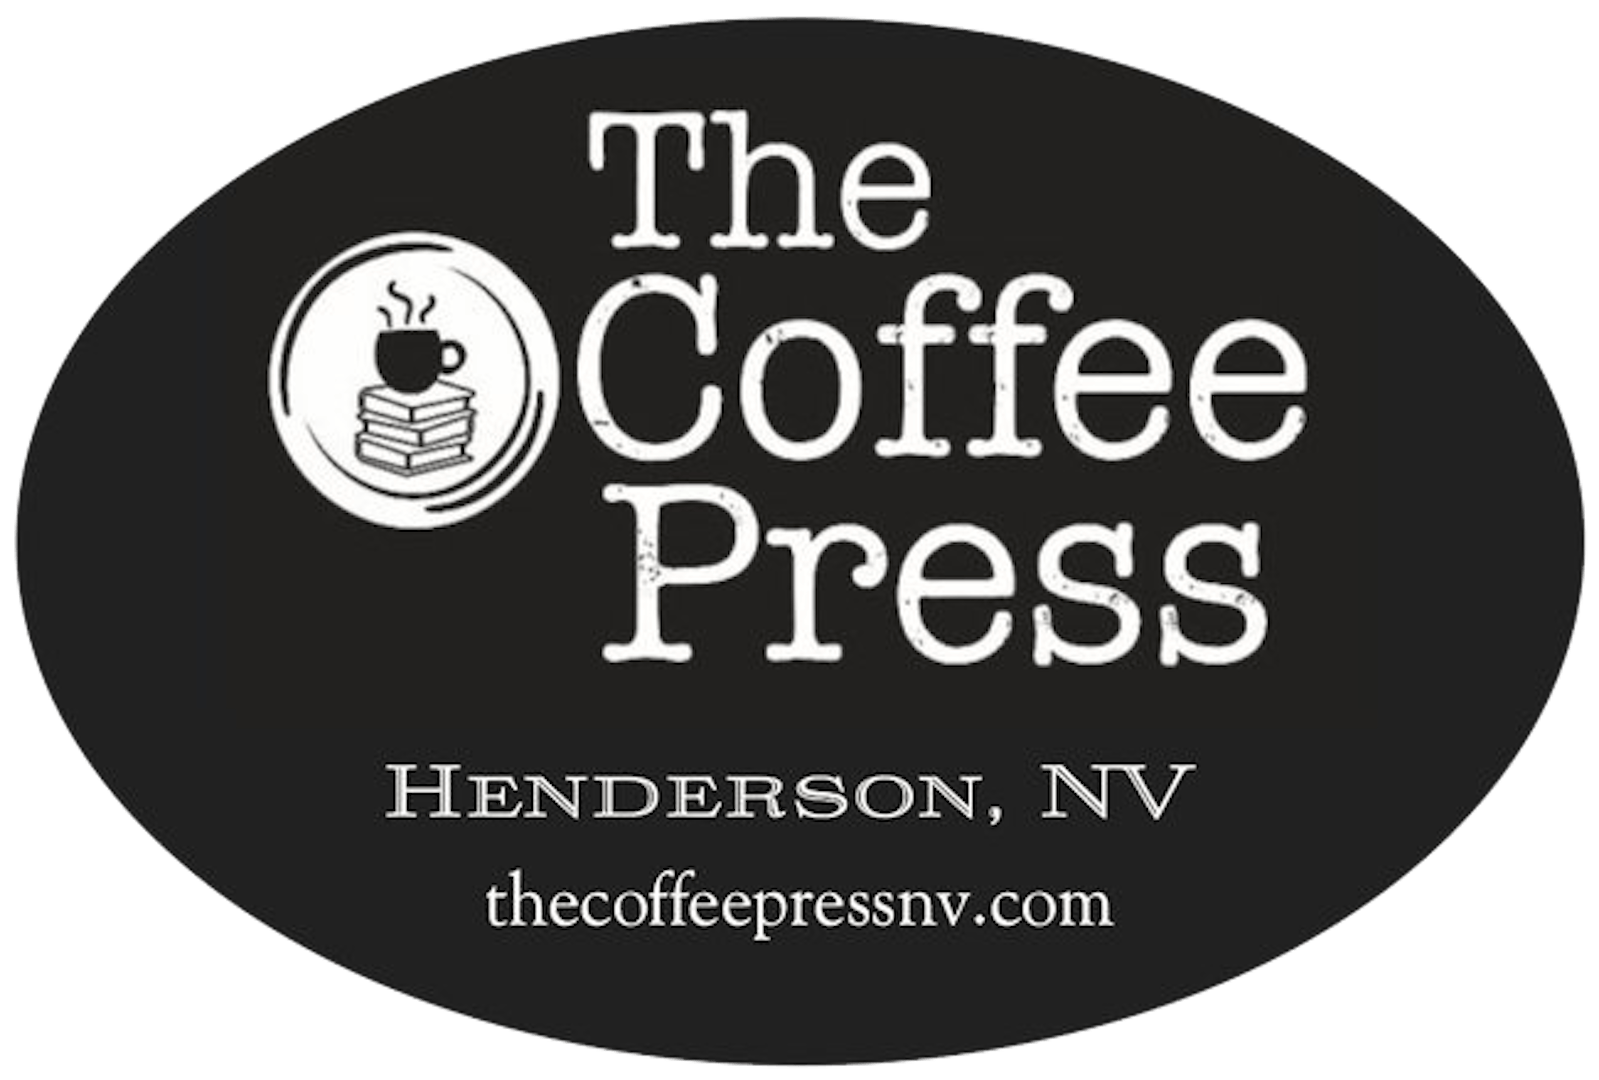 THE COFFEE PRESS